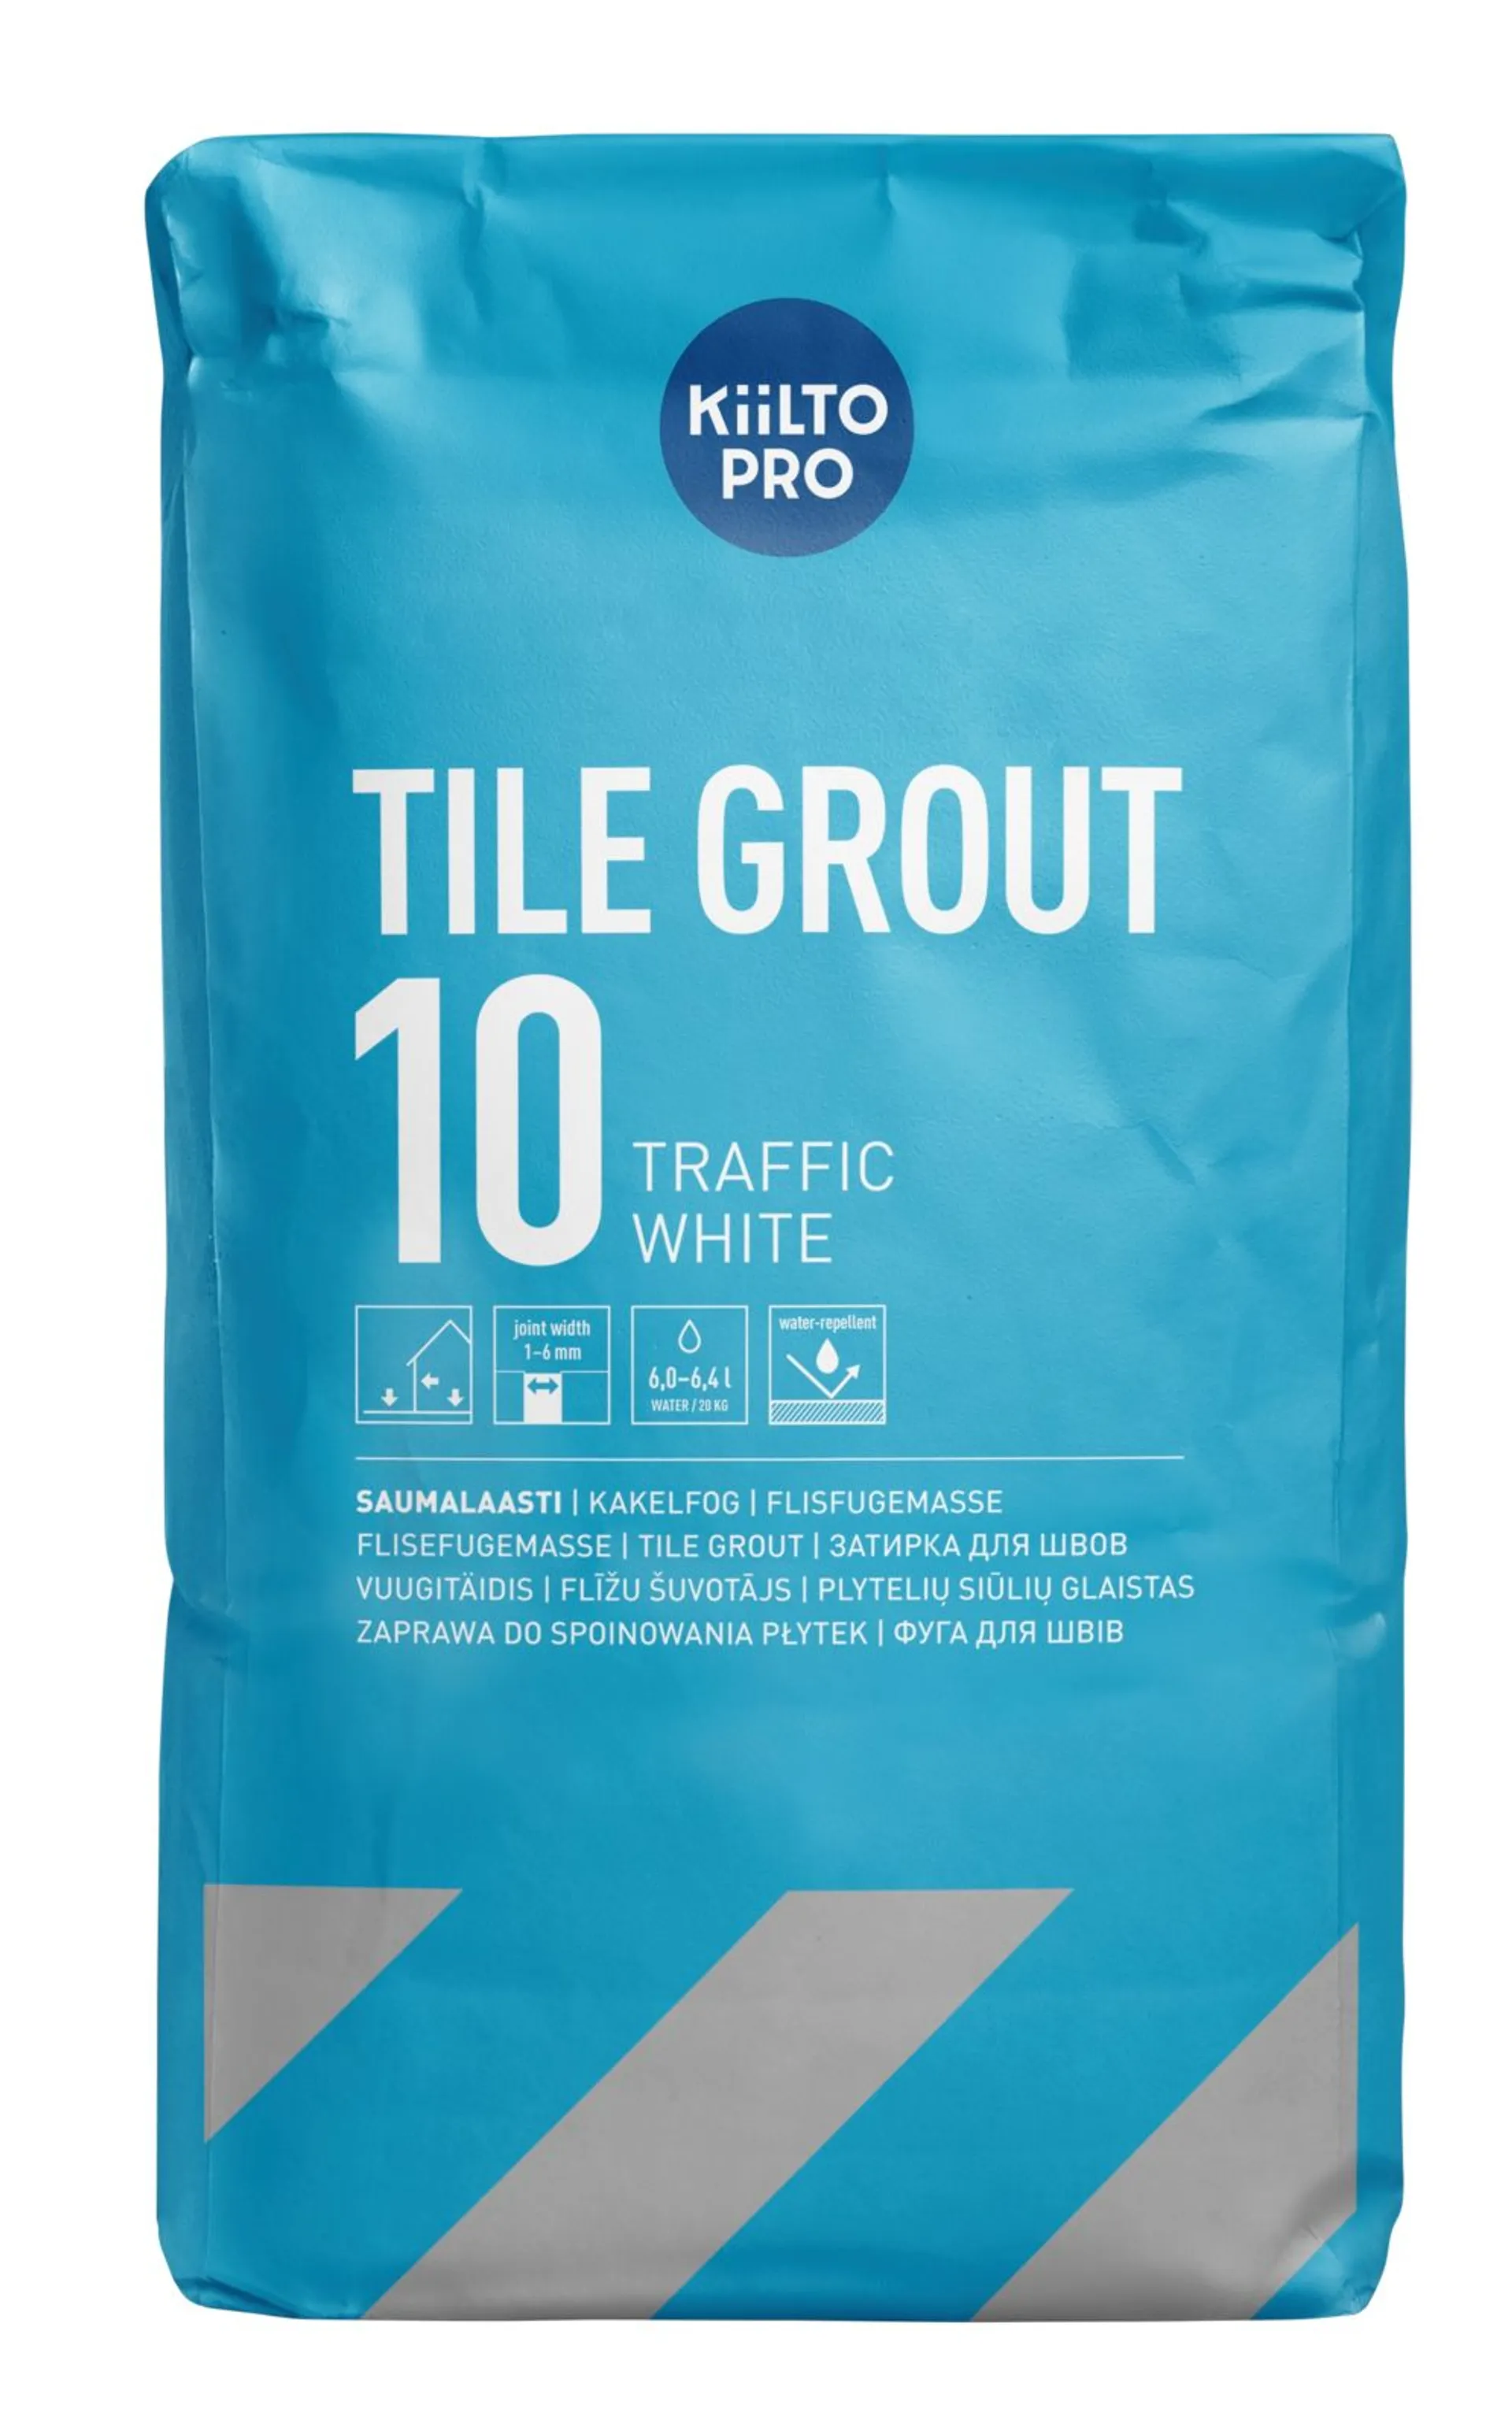 Kiilto Pro Tile grout saumalaasti 10 traffic white 20 kg